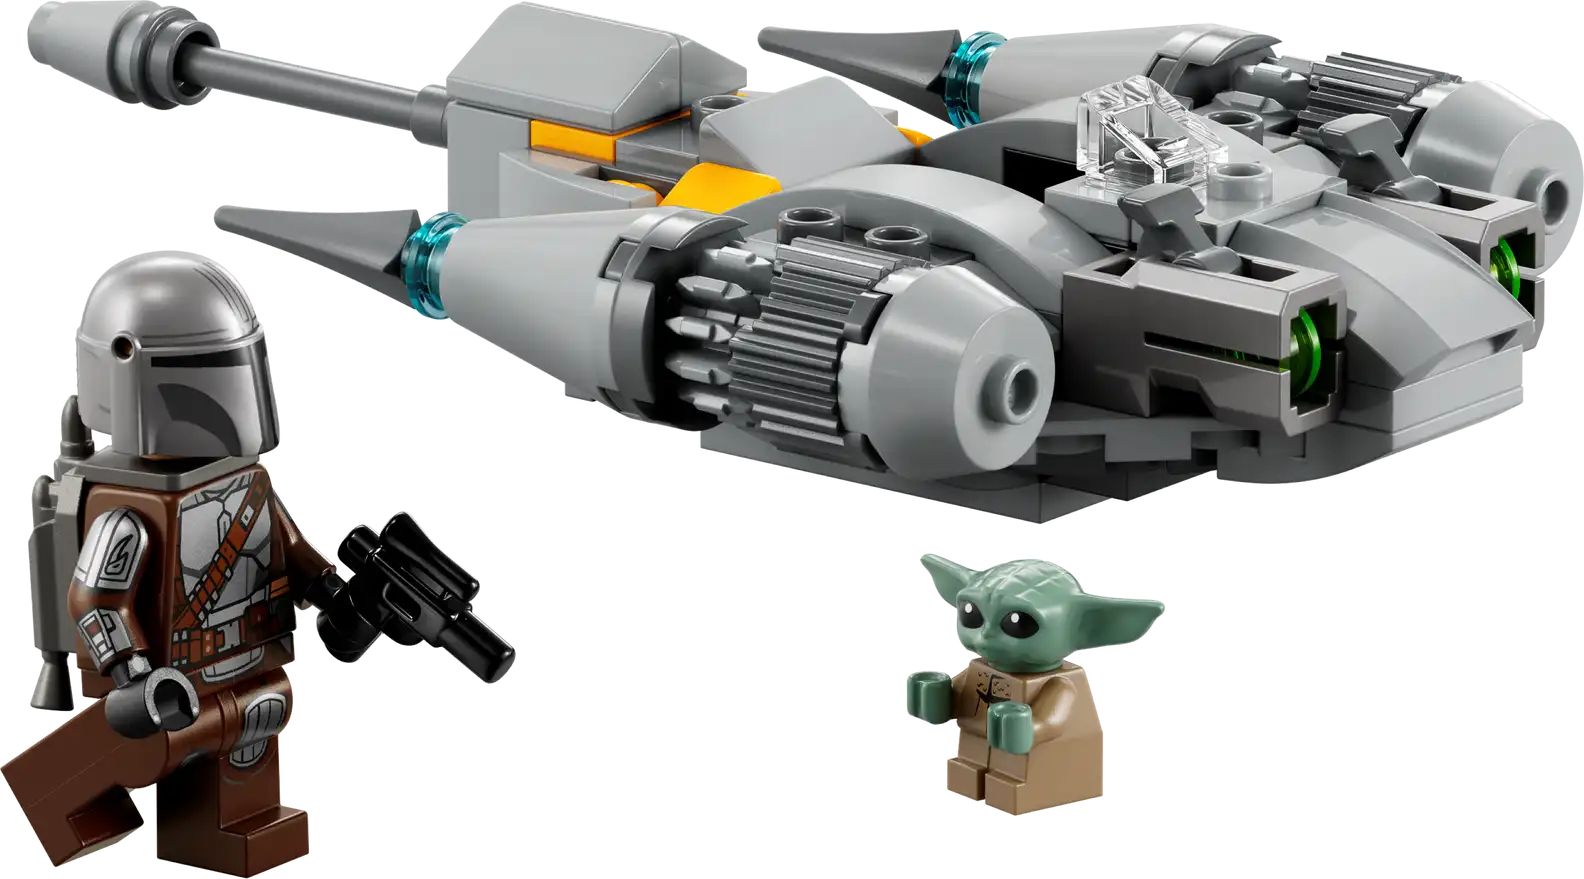 Lego Star Wars Microfighter Caza Estelar N-1 de The Mandalorian 75363